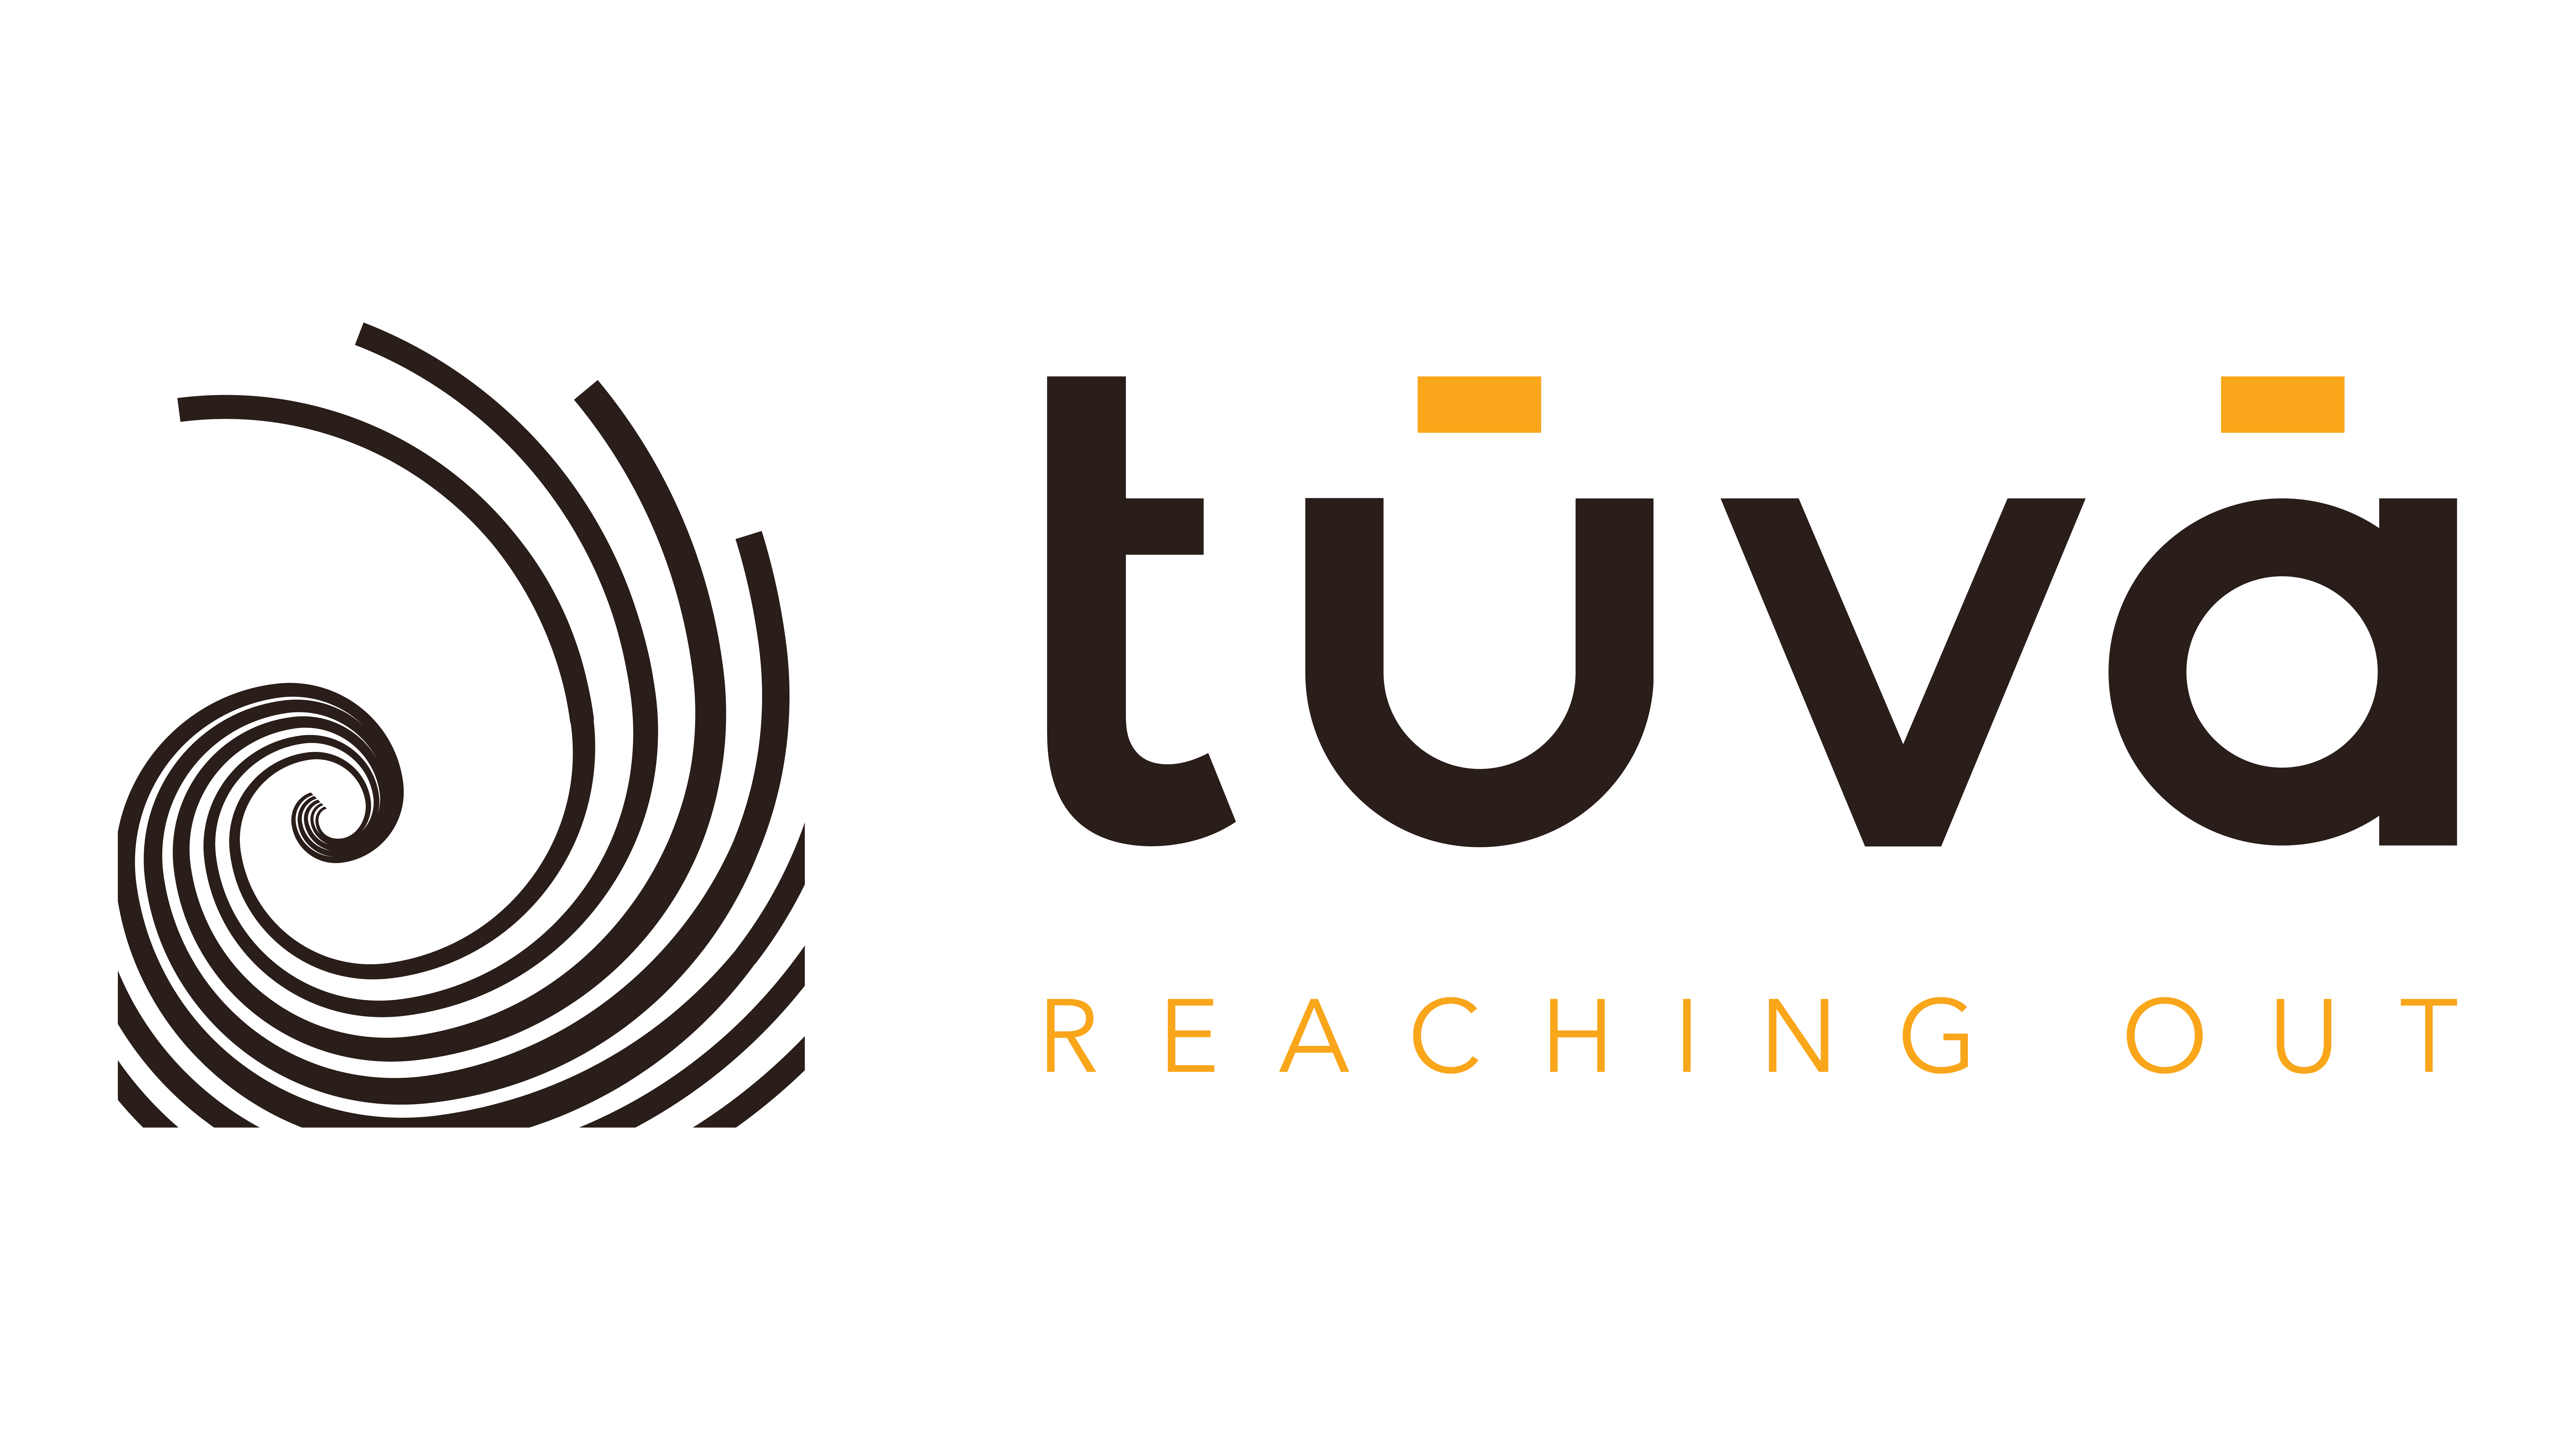 TUVA Communications